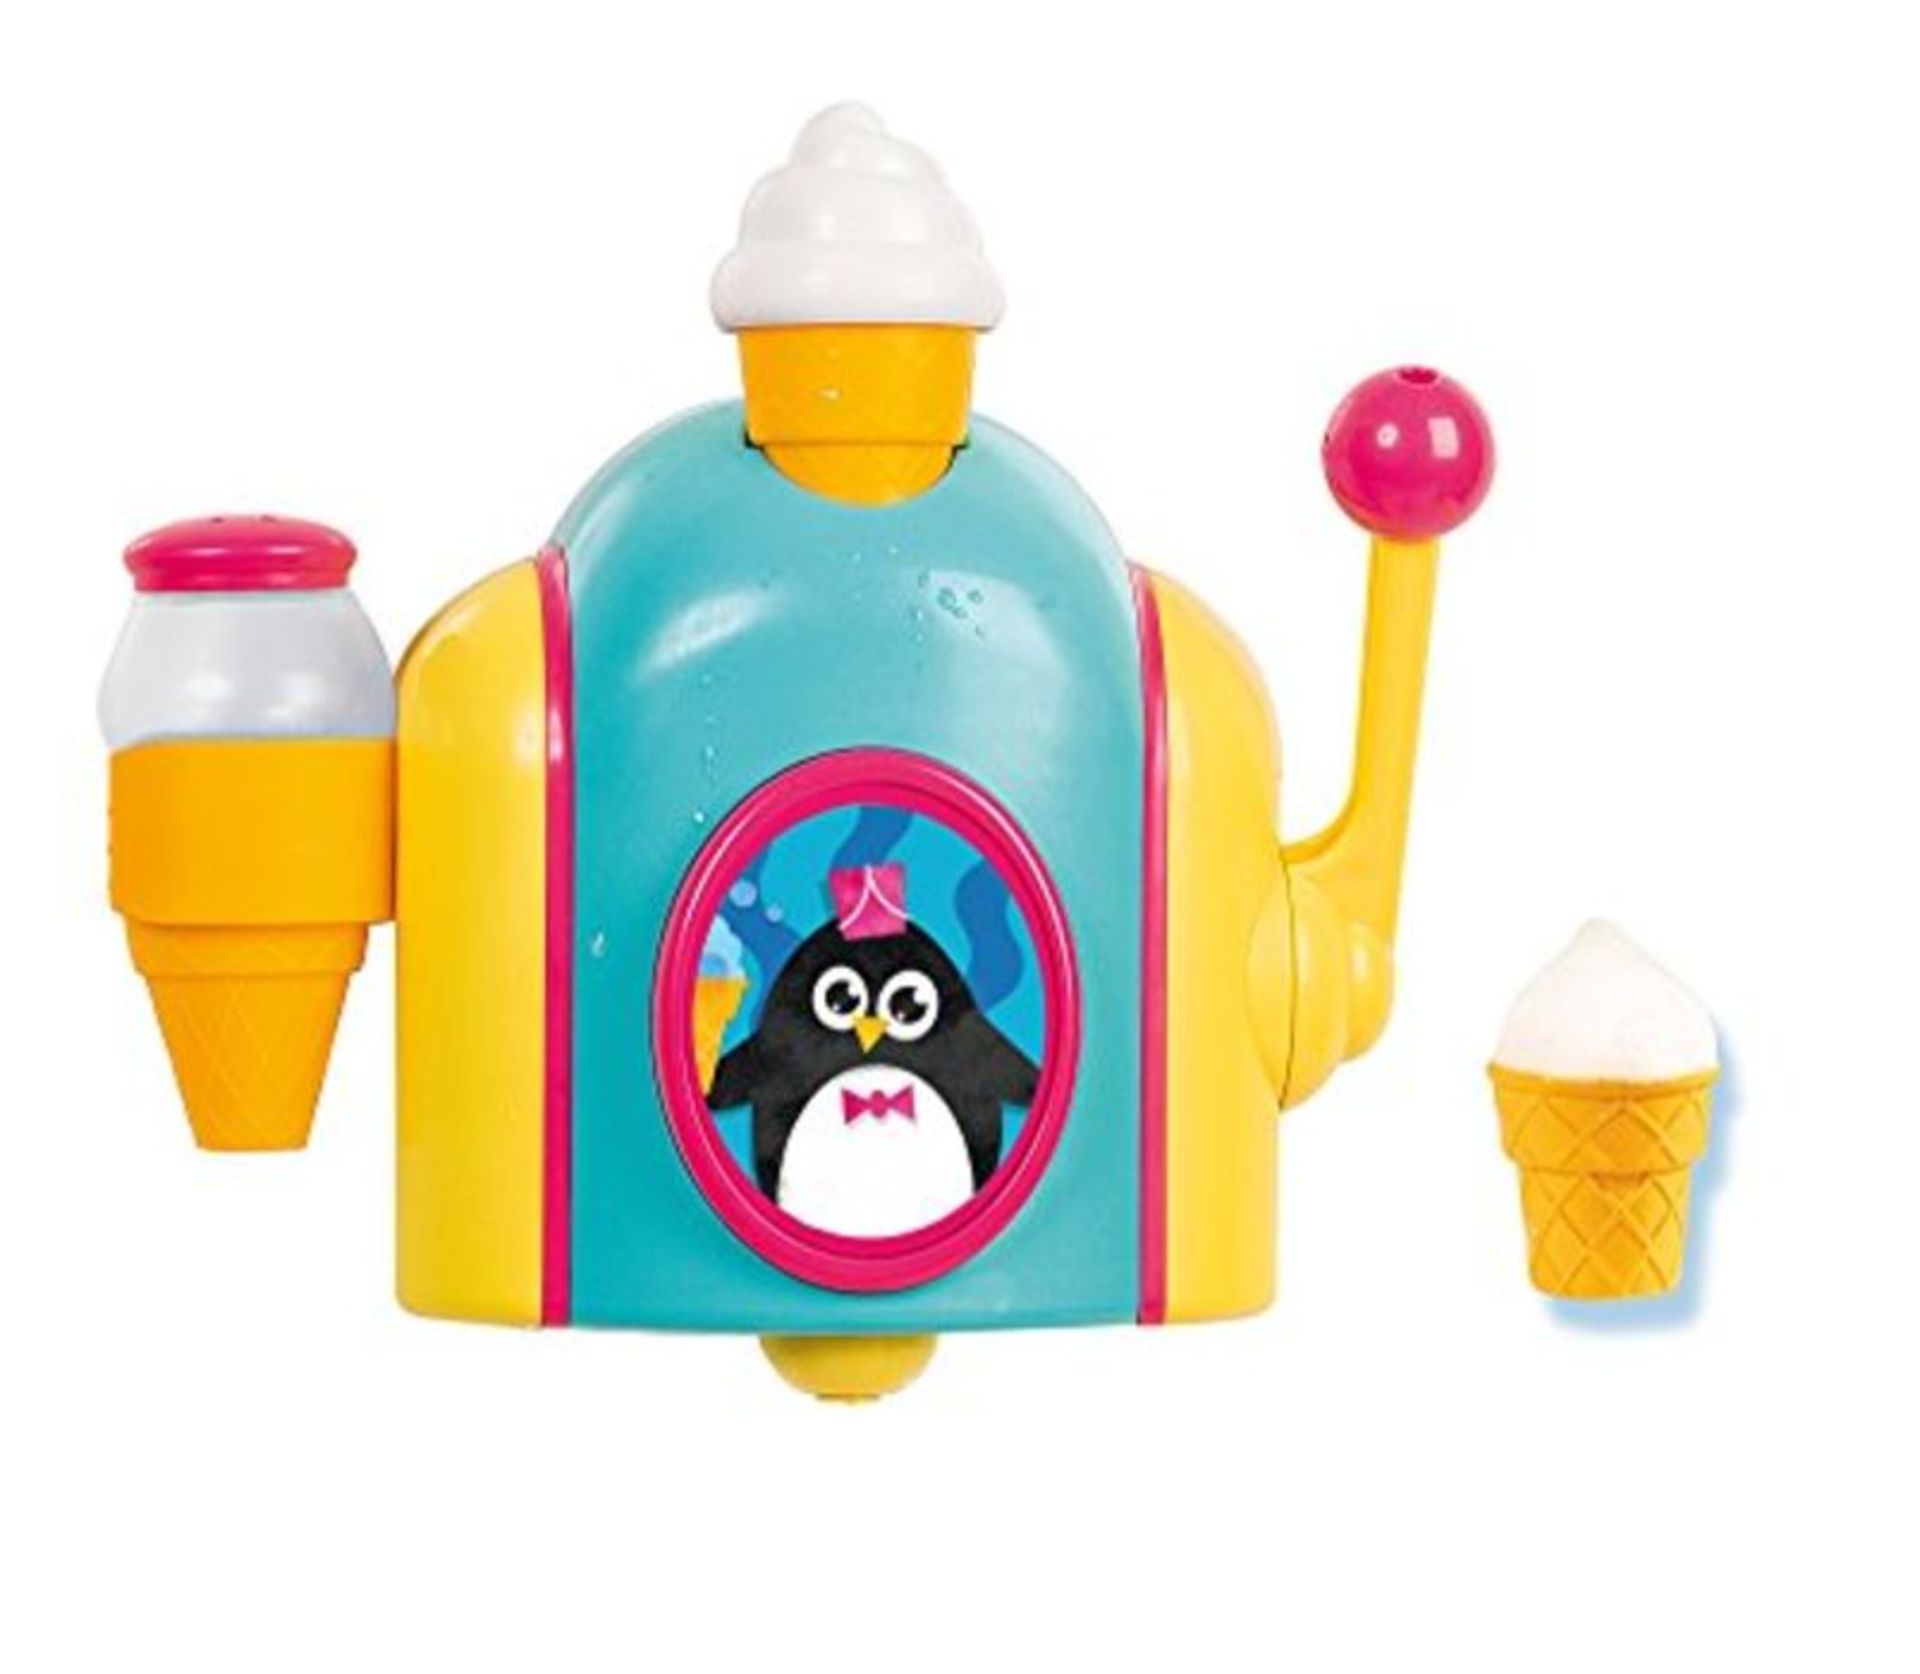 Toomies Tomy Foam Cone Factory Baby Bath Toy-Ice Cream Themed E72378, Multicolour, 21